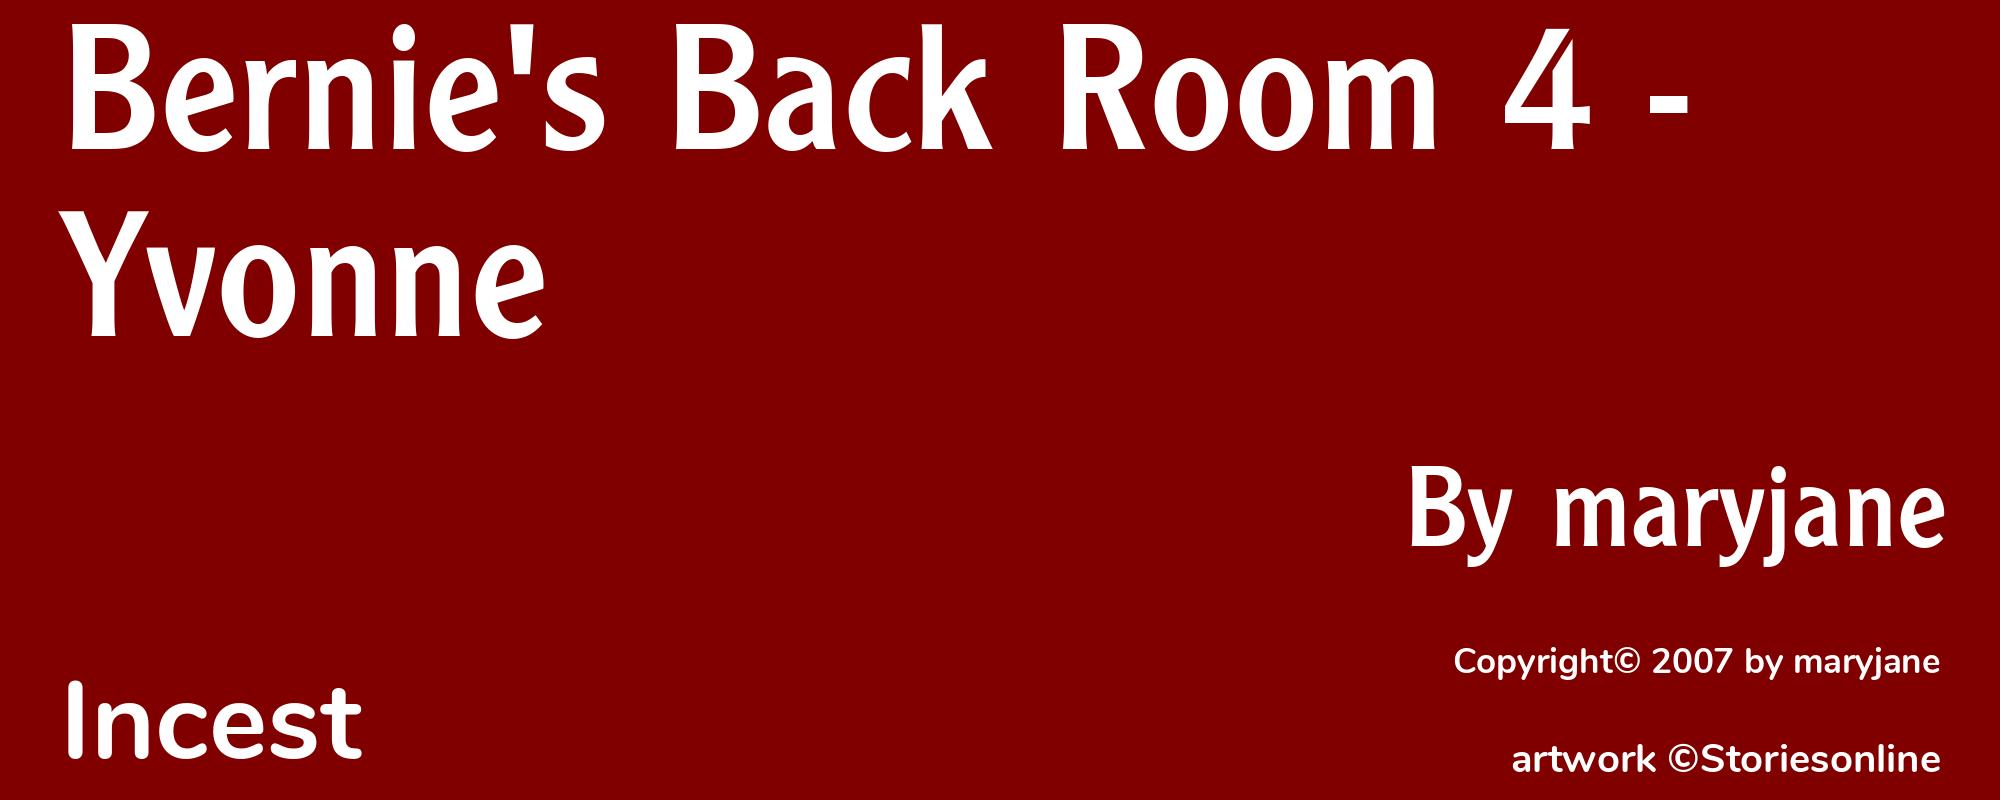 Bernie's Back Room 4 - Yvonne - Cover